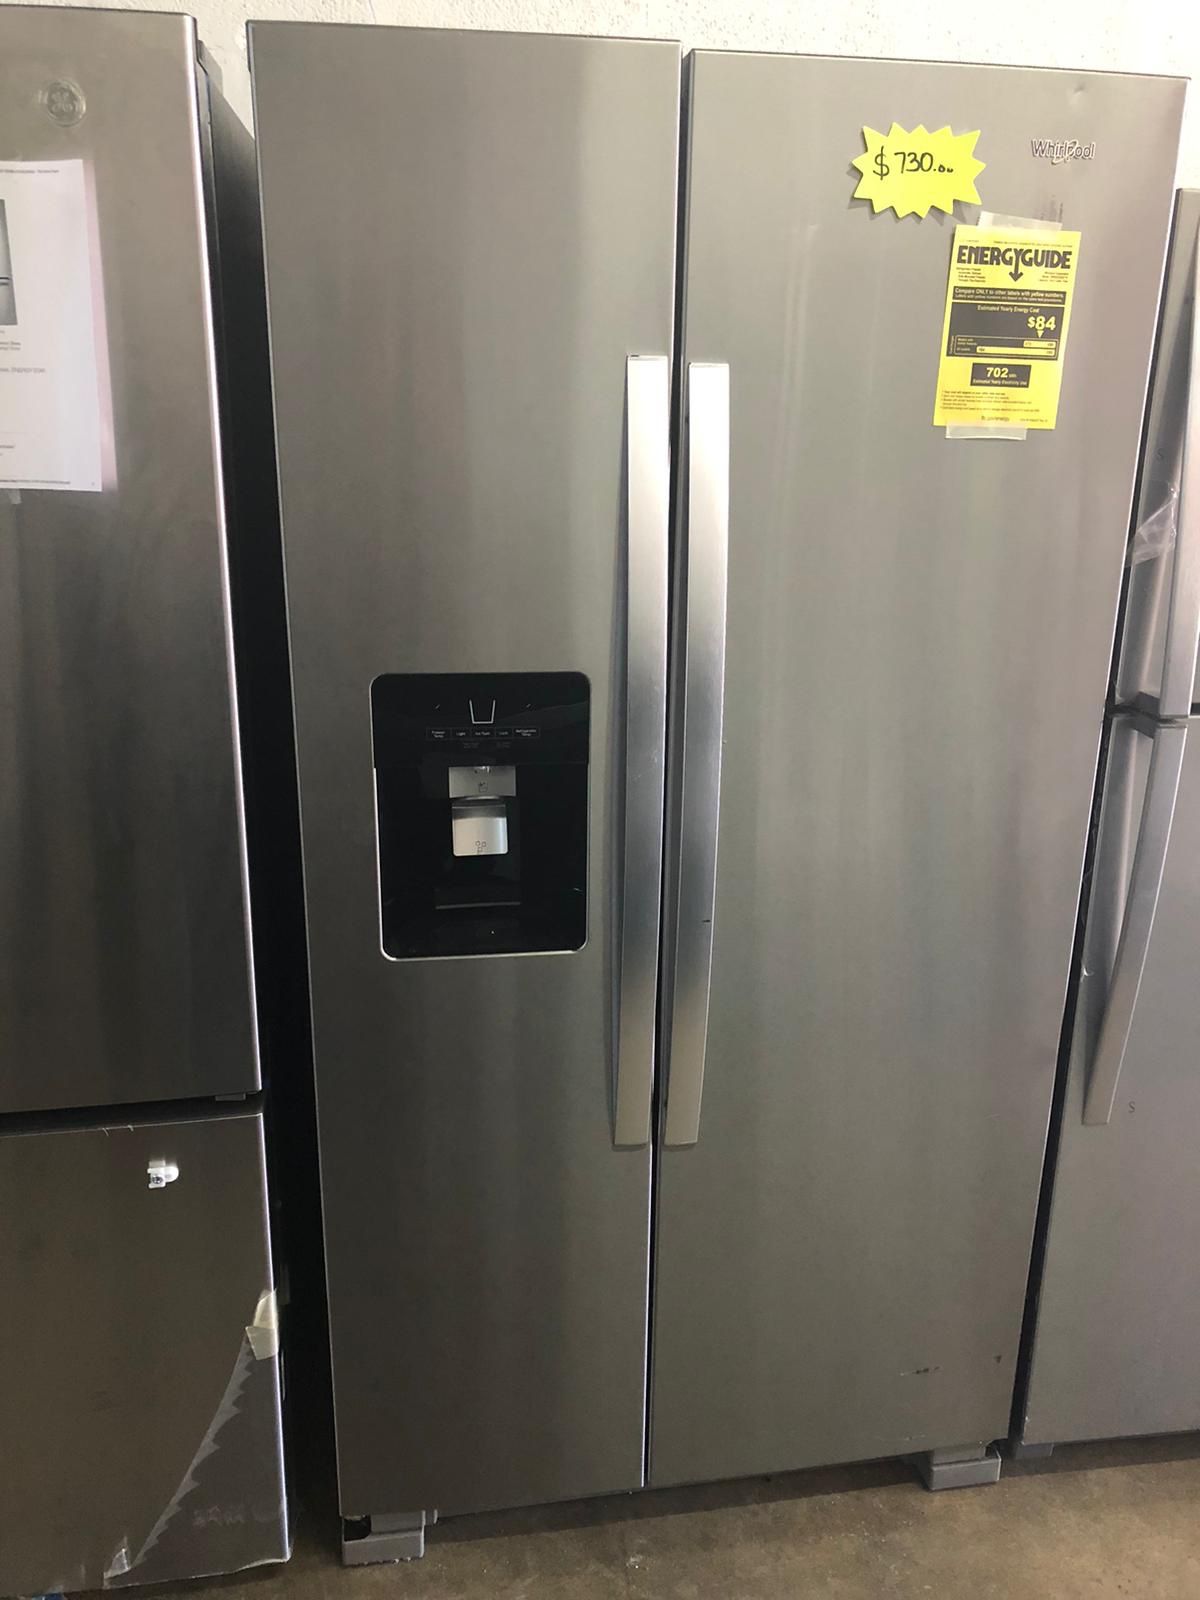 Whirlpool refrigerator 33” or 36” BRAND NEW 1 YEAR WARRANTY